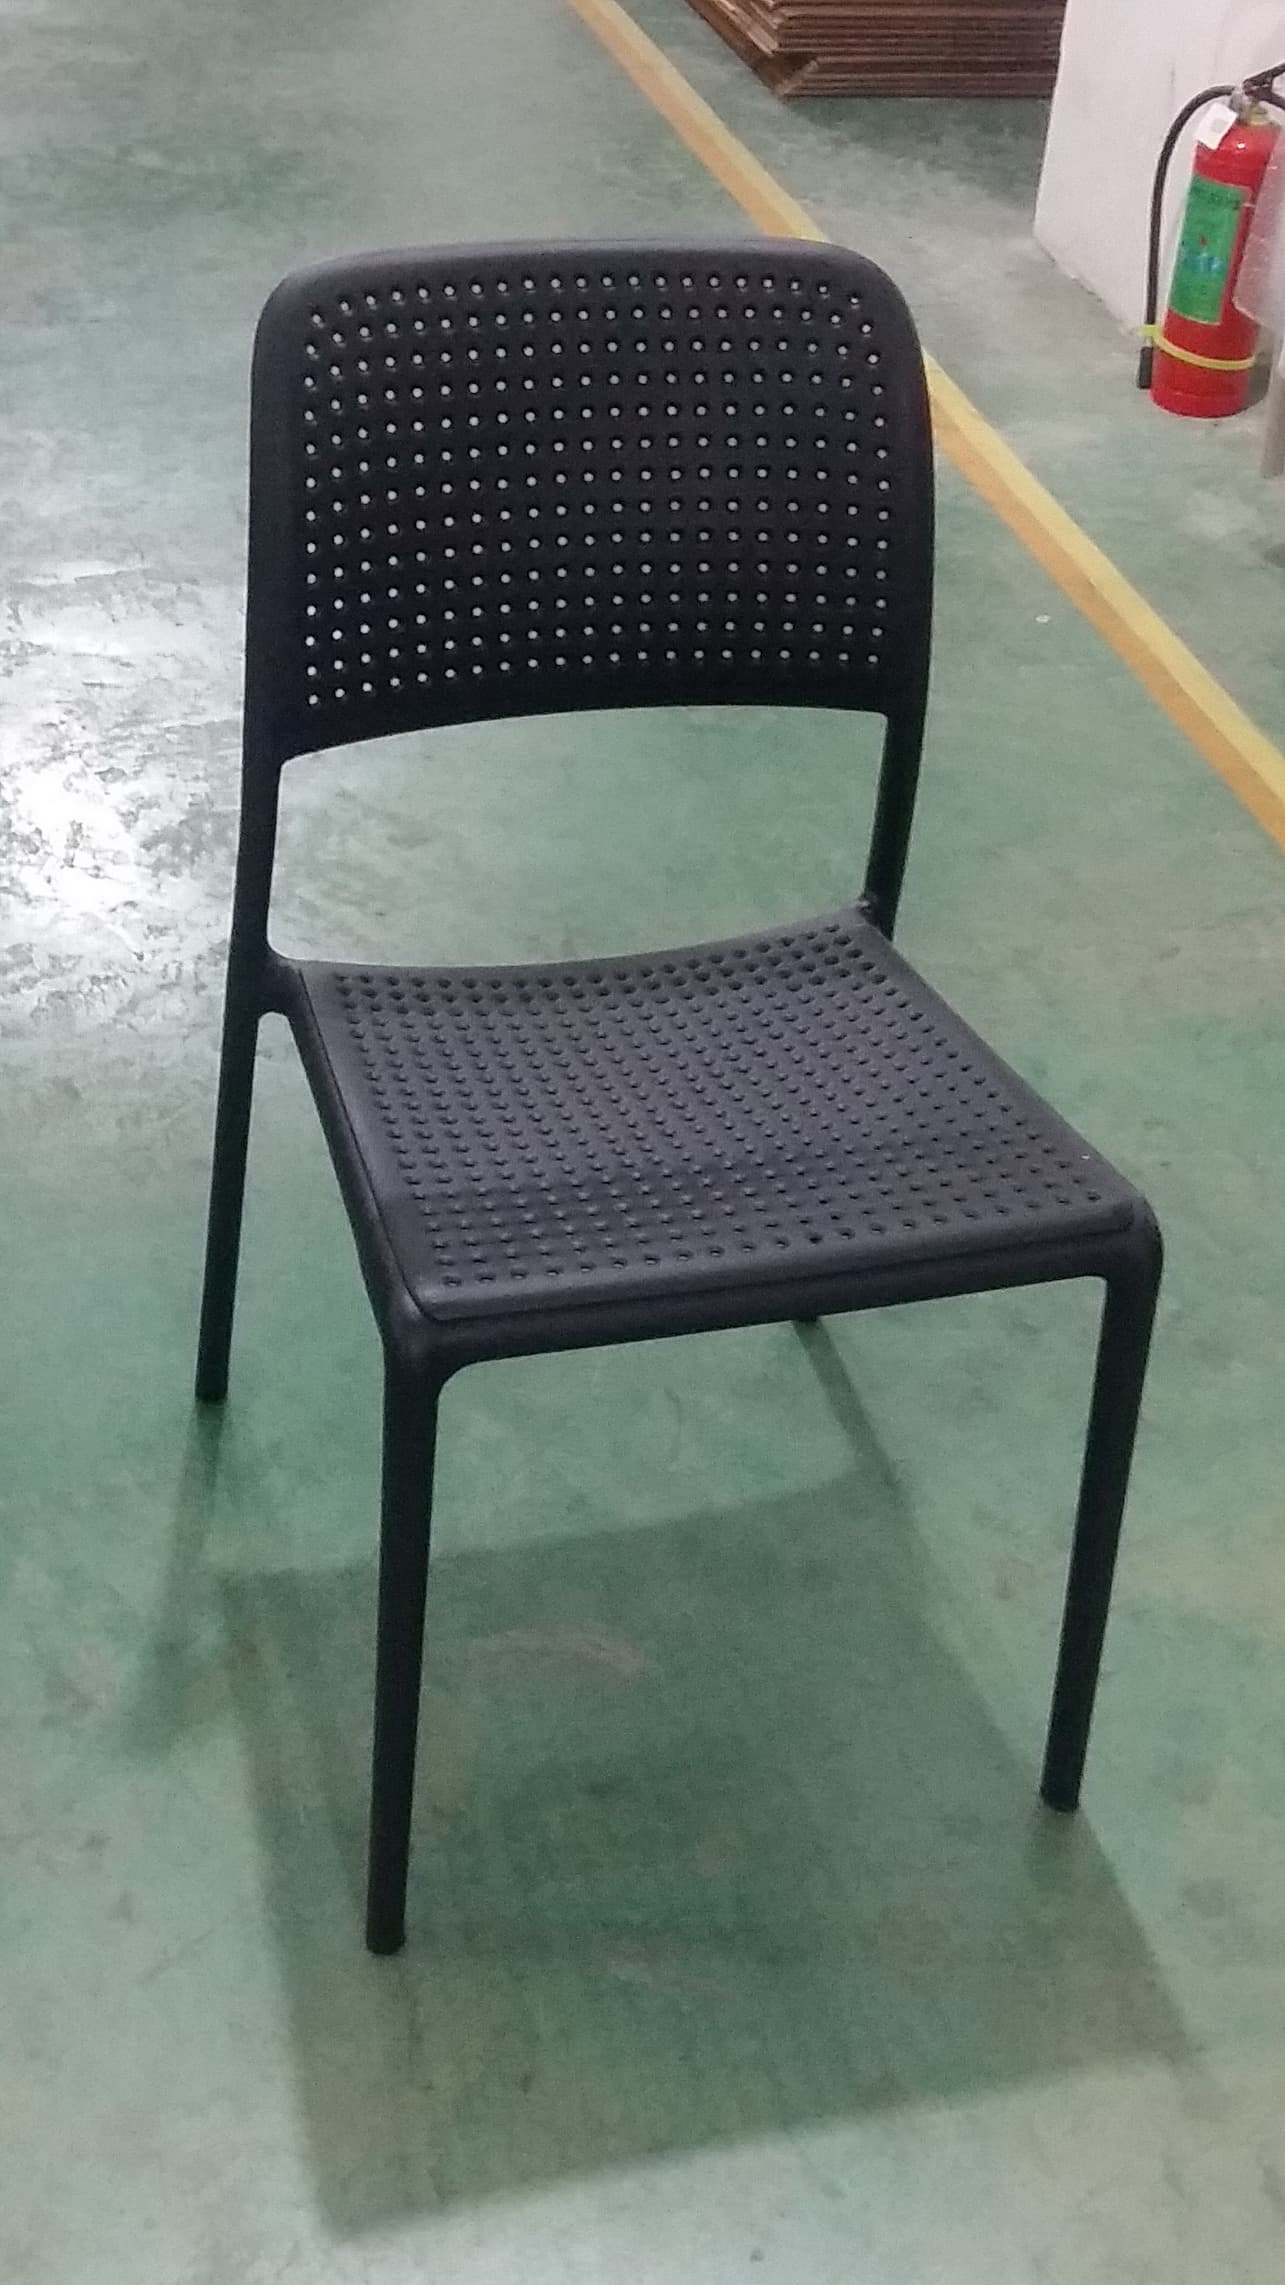 modern plastic events arm chair furniture